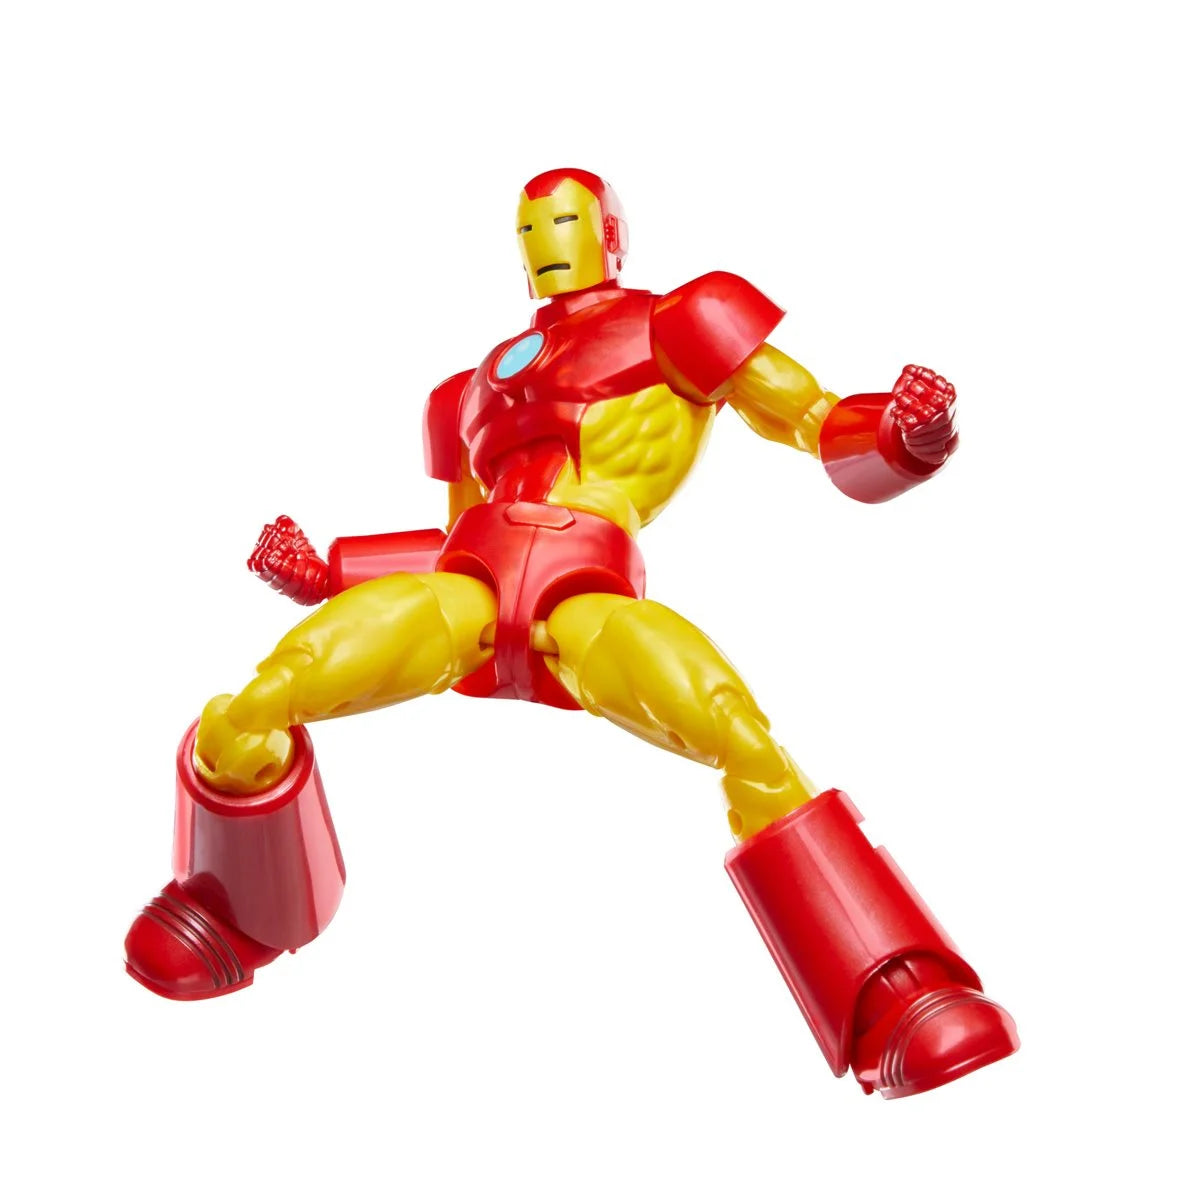 Pre-Order: Iron Man Marvel Legends Iron Man (Model 9) 6-Inch Action Figure